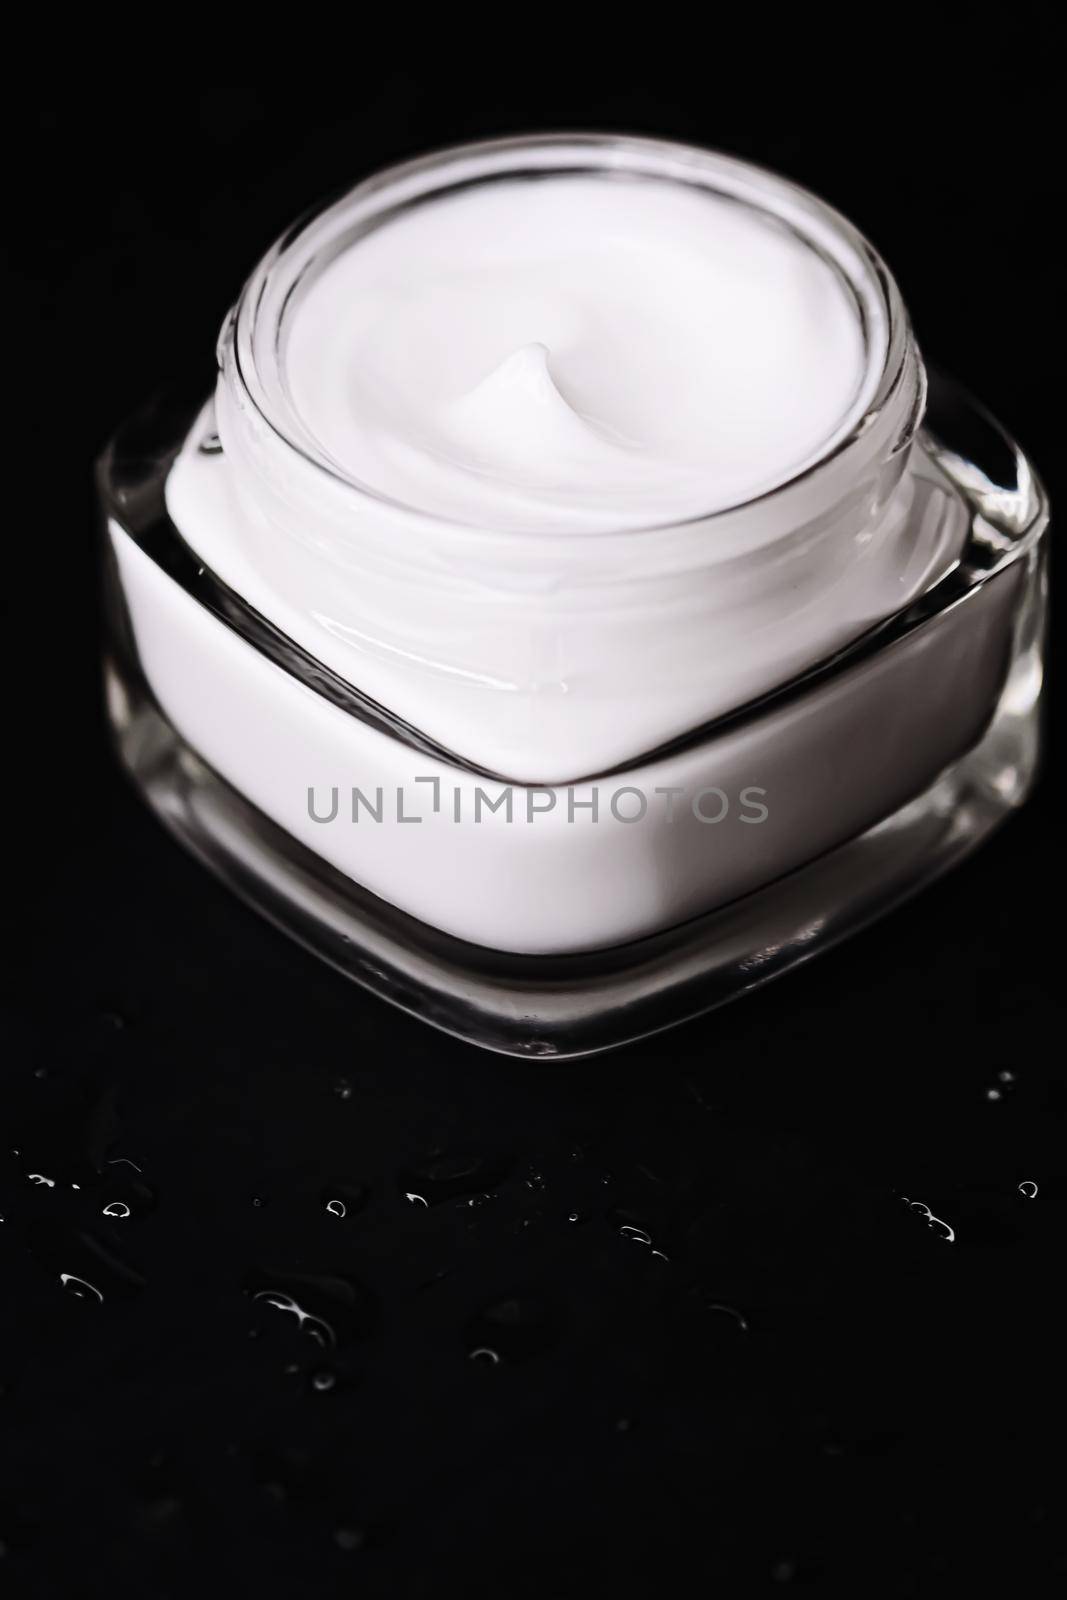 Face cream jar, cosmetic and skincare closeup